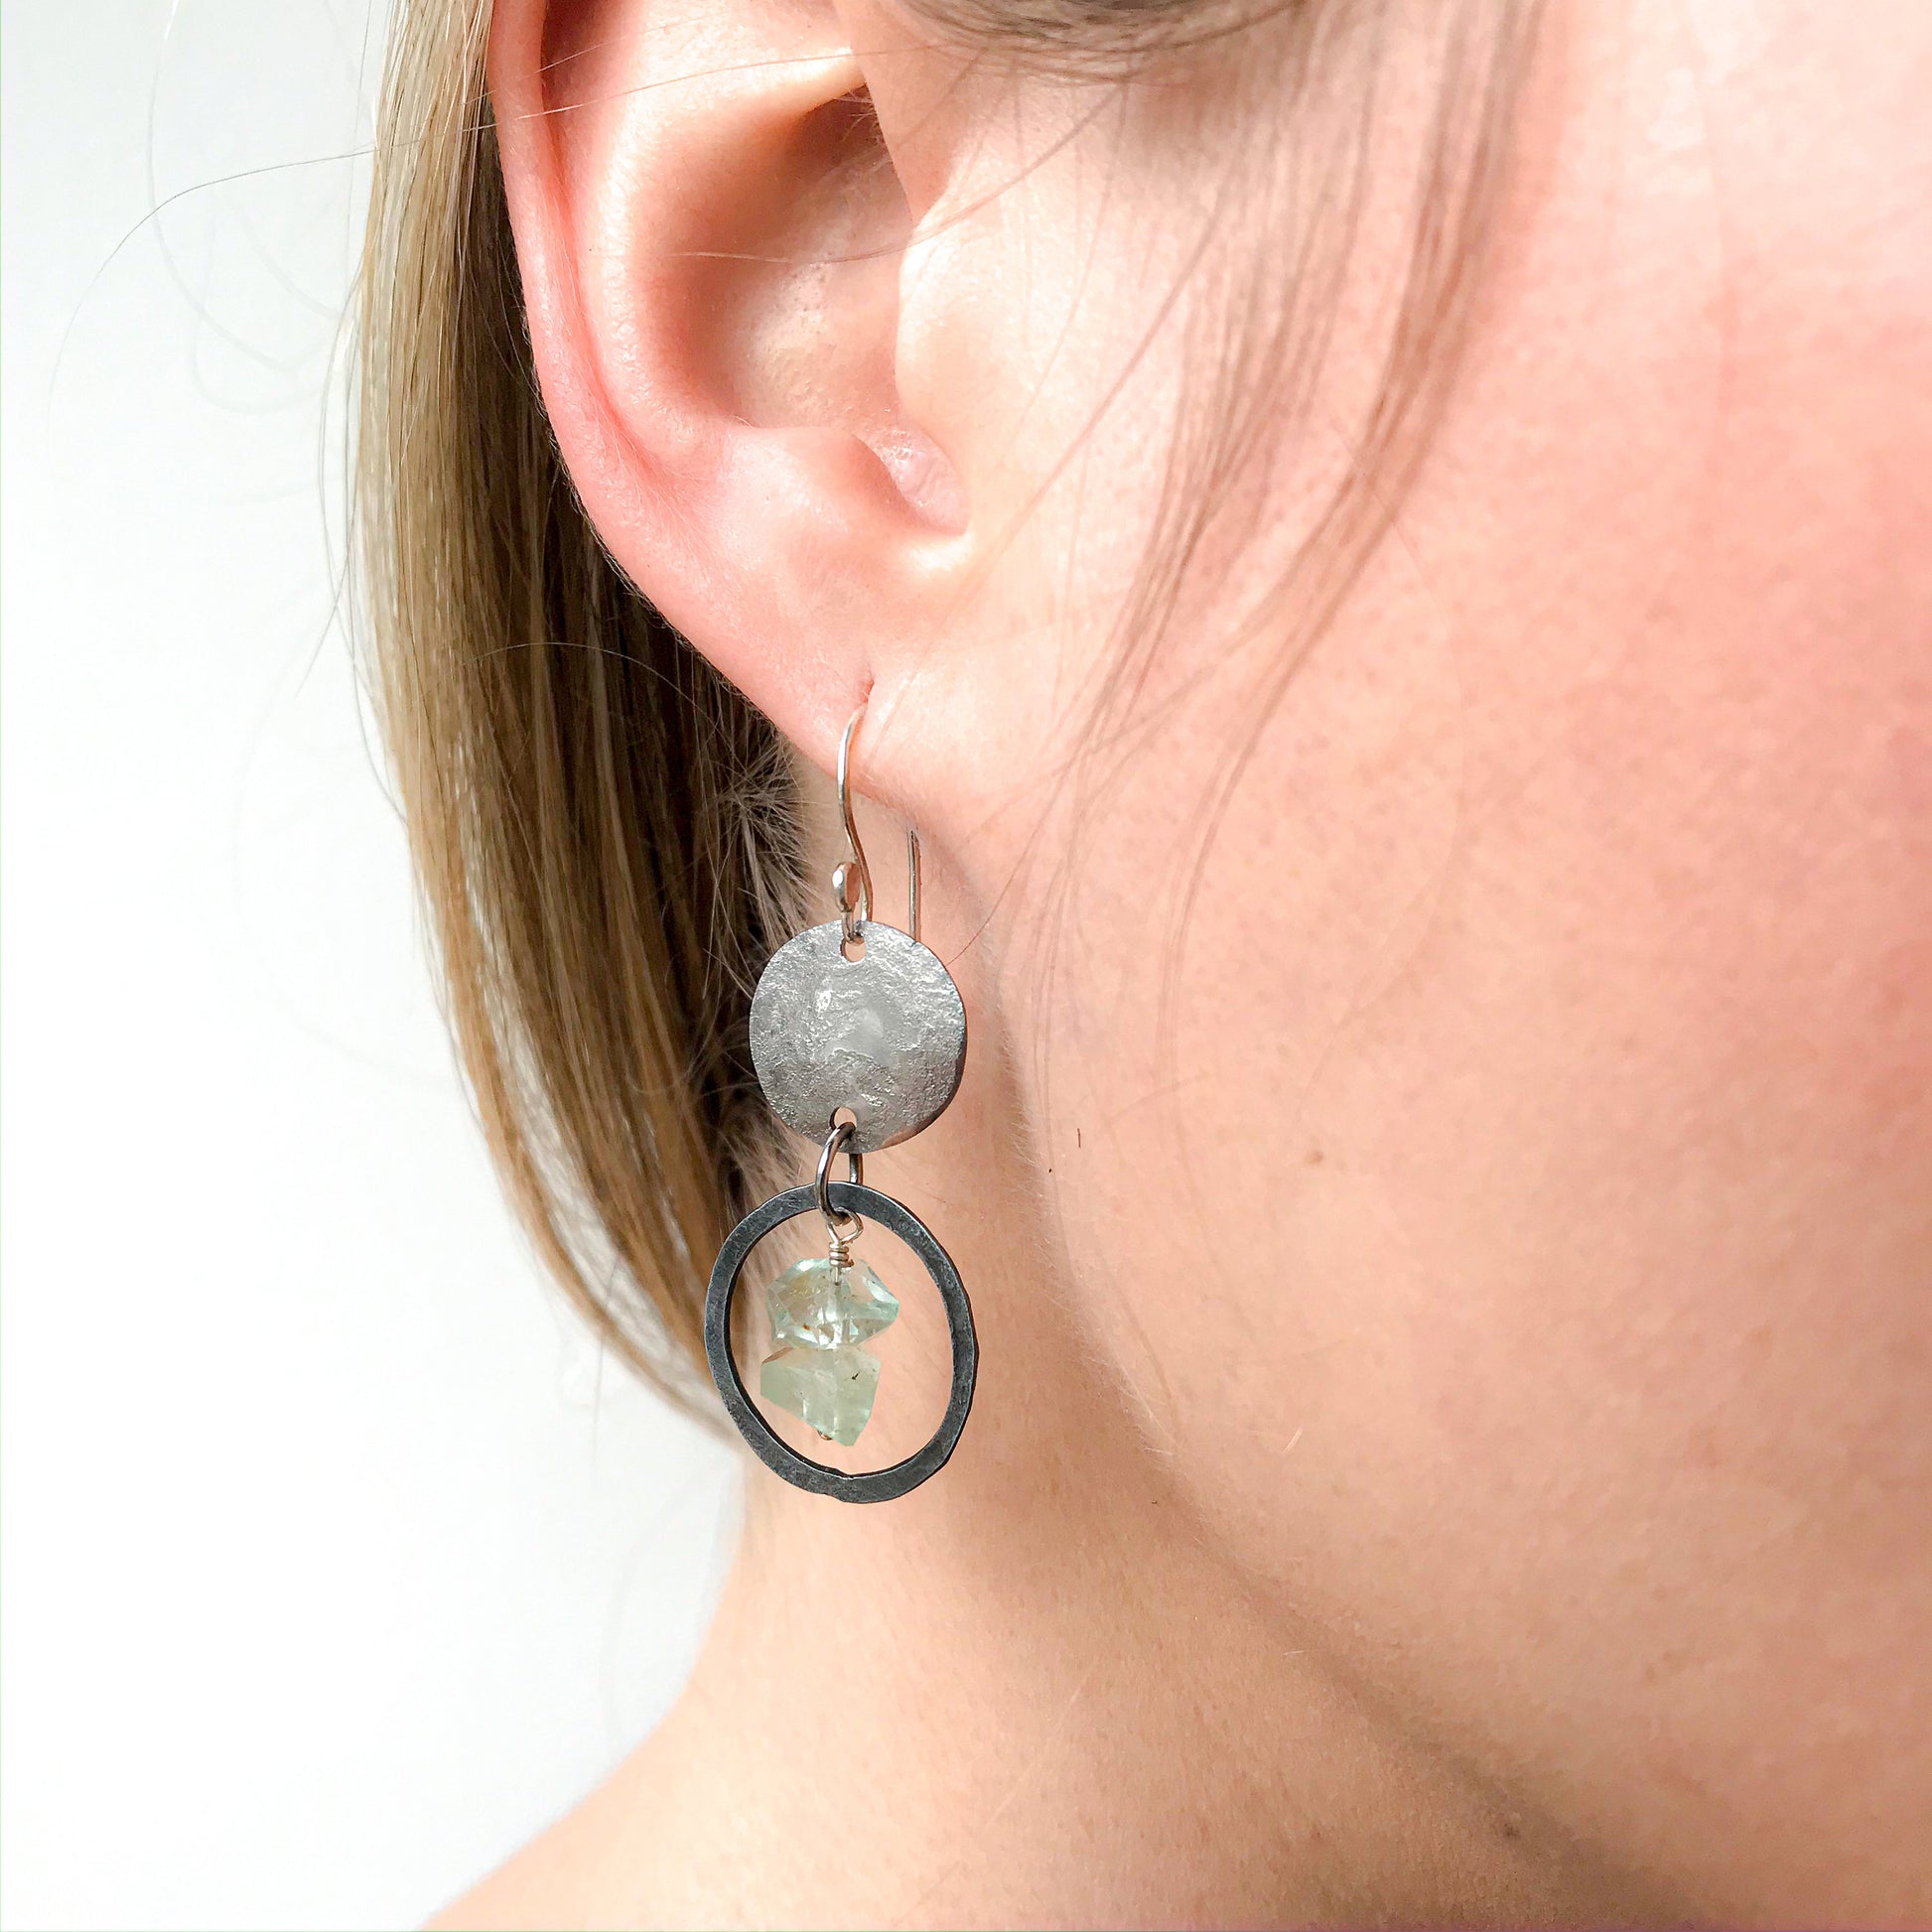 6th anniversary jewelry gift for her, iron earrings, hammered disc earrings, modern anniversary earrings, aquamarine jewelry